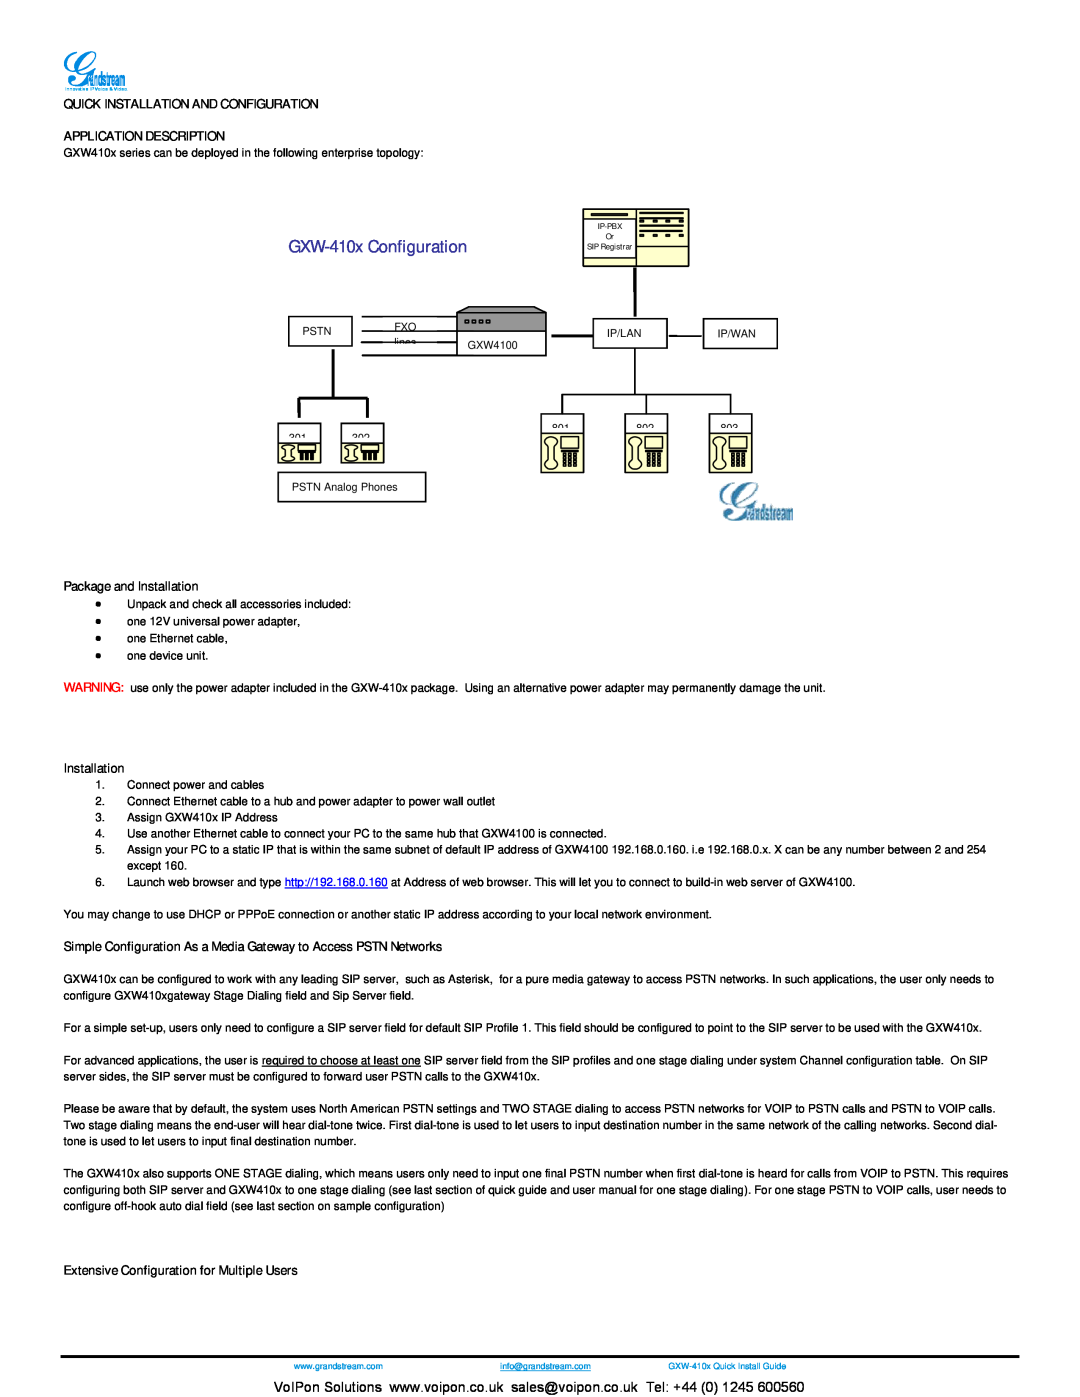 Grandstream Networks GXW4108, GXW4104 GXW-410x Configuration, Quick Installation And Configuration Application Description 